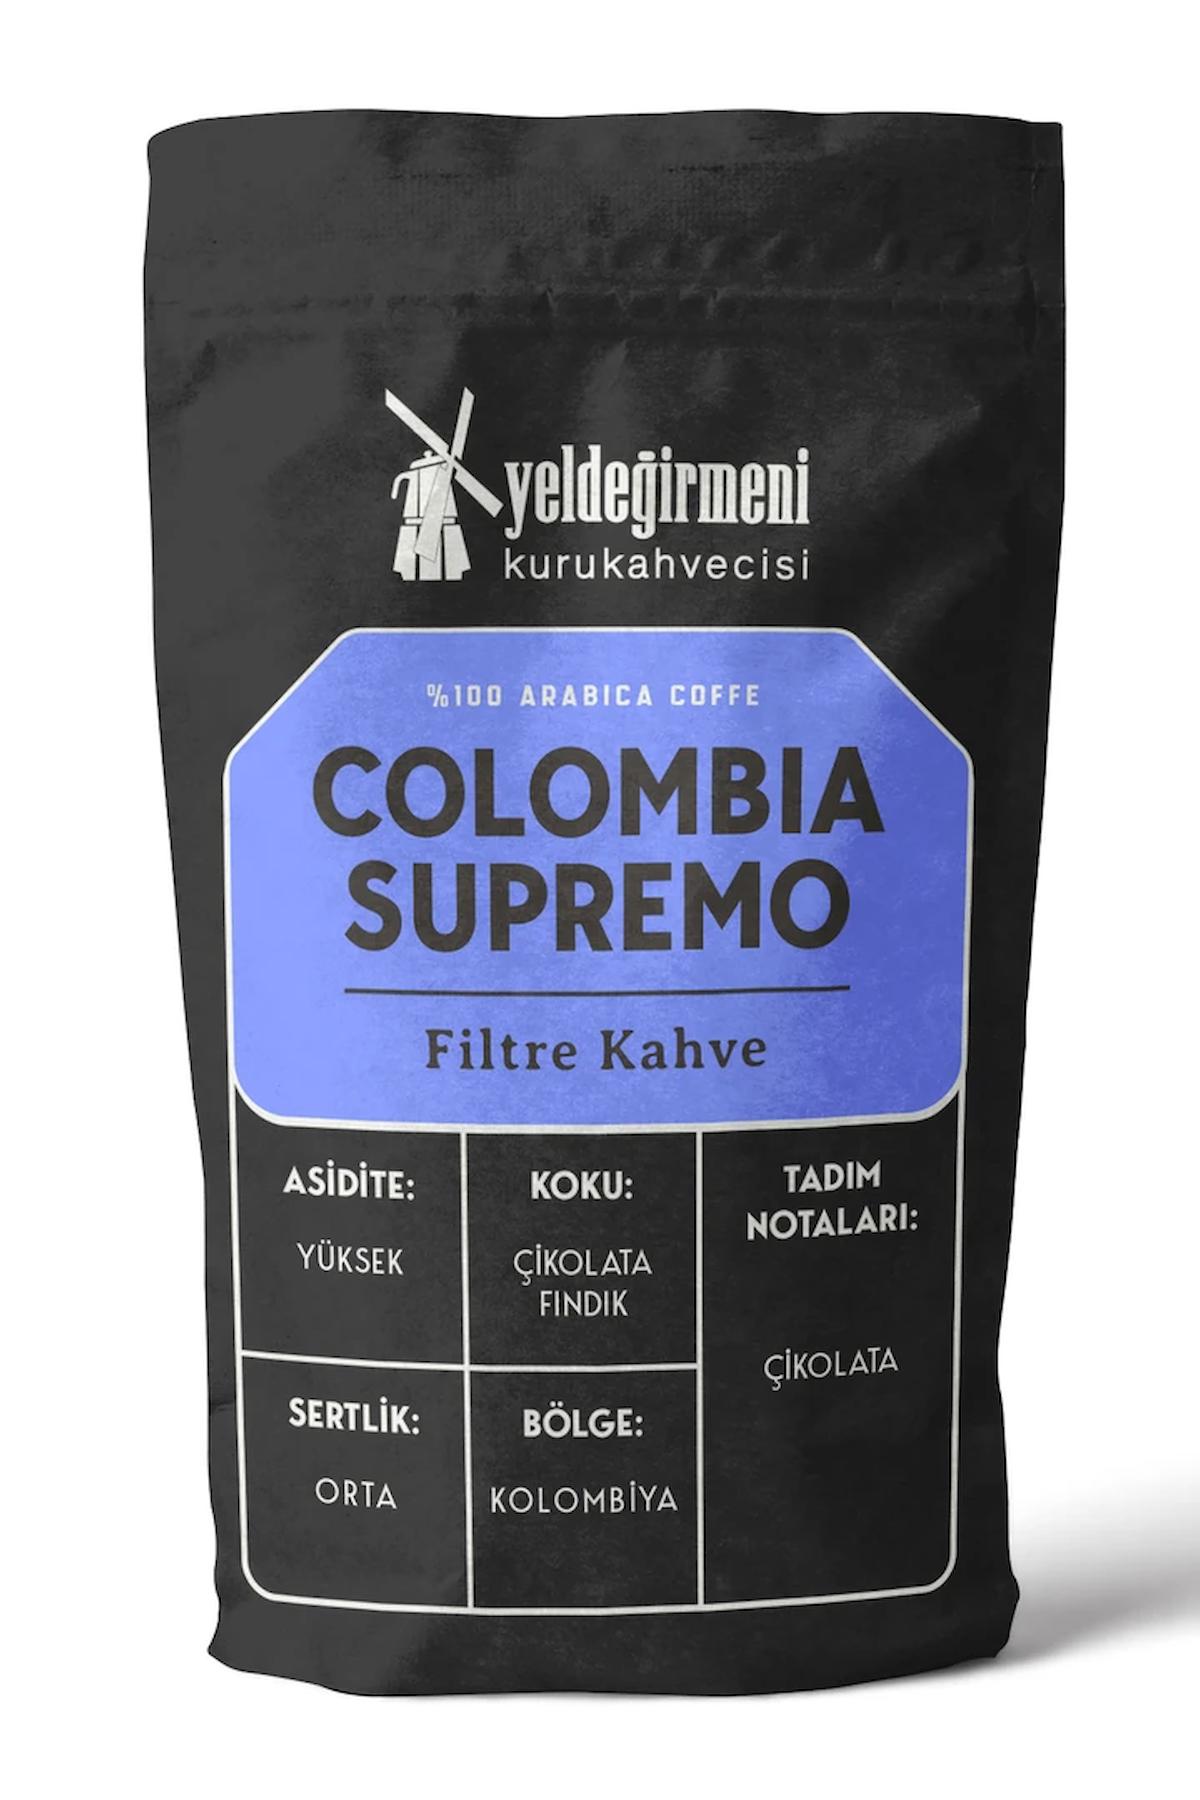 Yeldeğirmeni Kurukahvecisi Colombia Supremo Filtre Kahve 1 kg